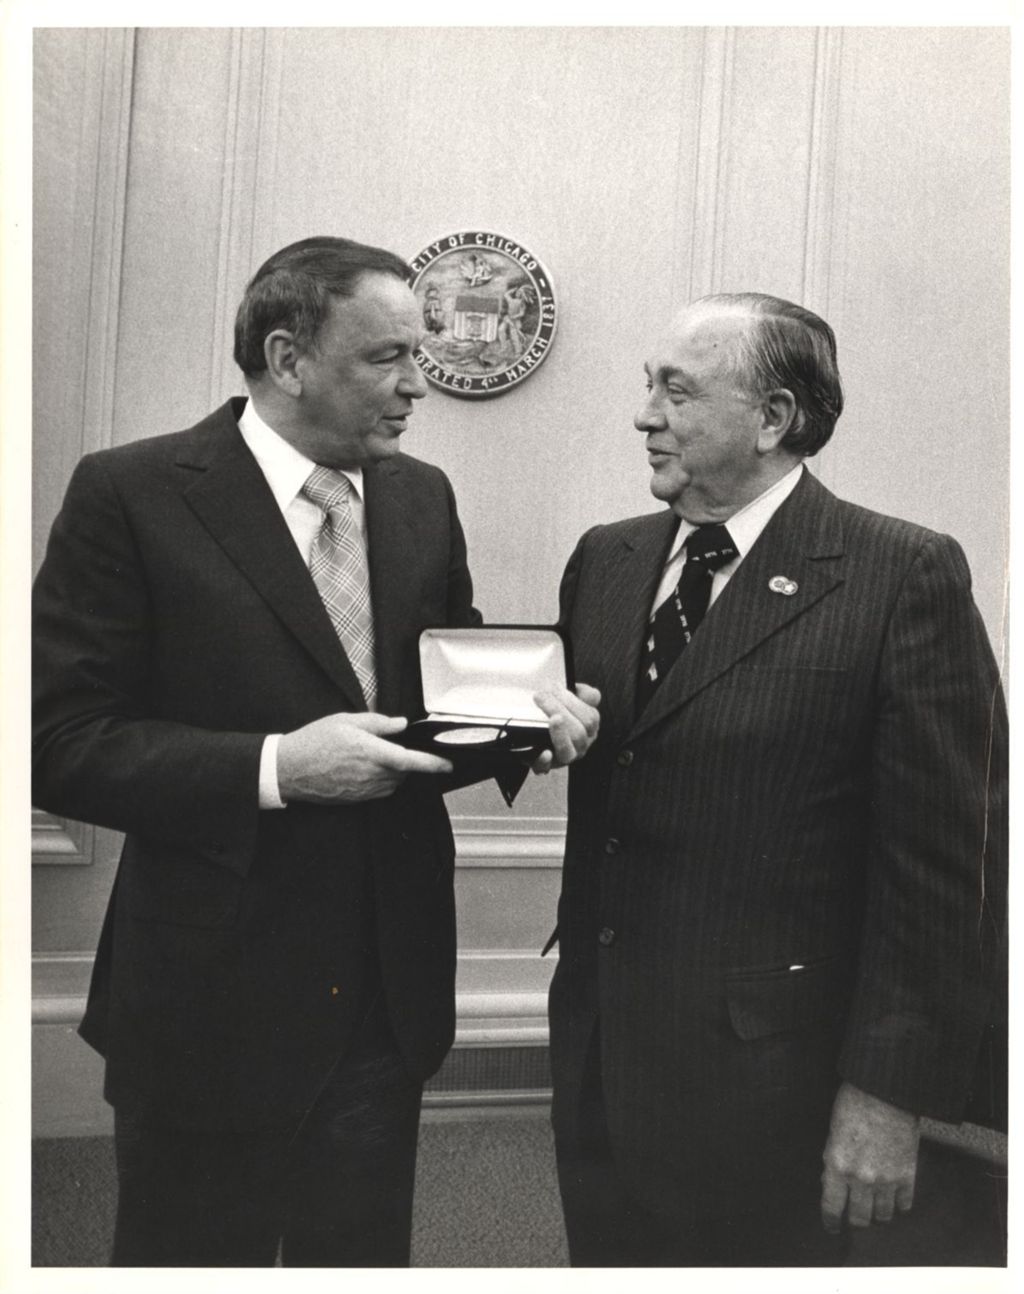 Miniature of Frank Sinatra and Mayor Richard J. Daley